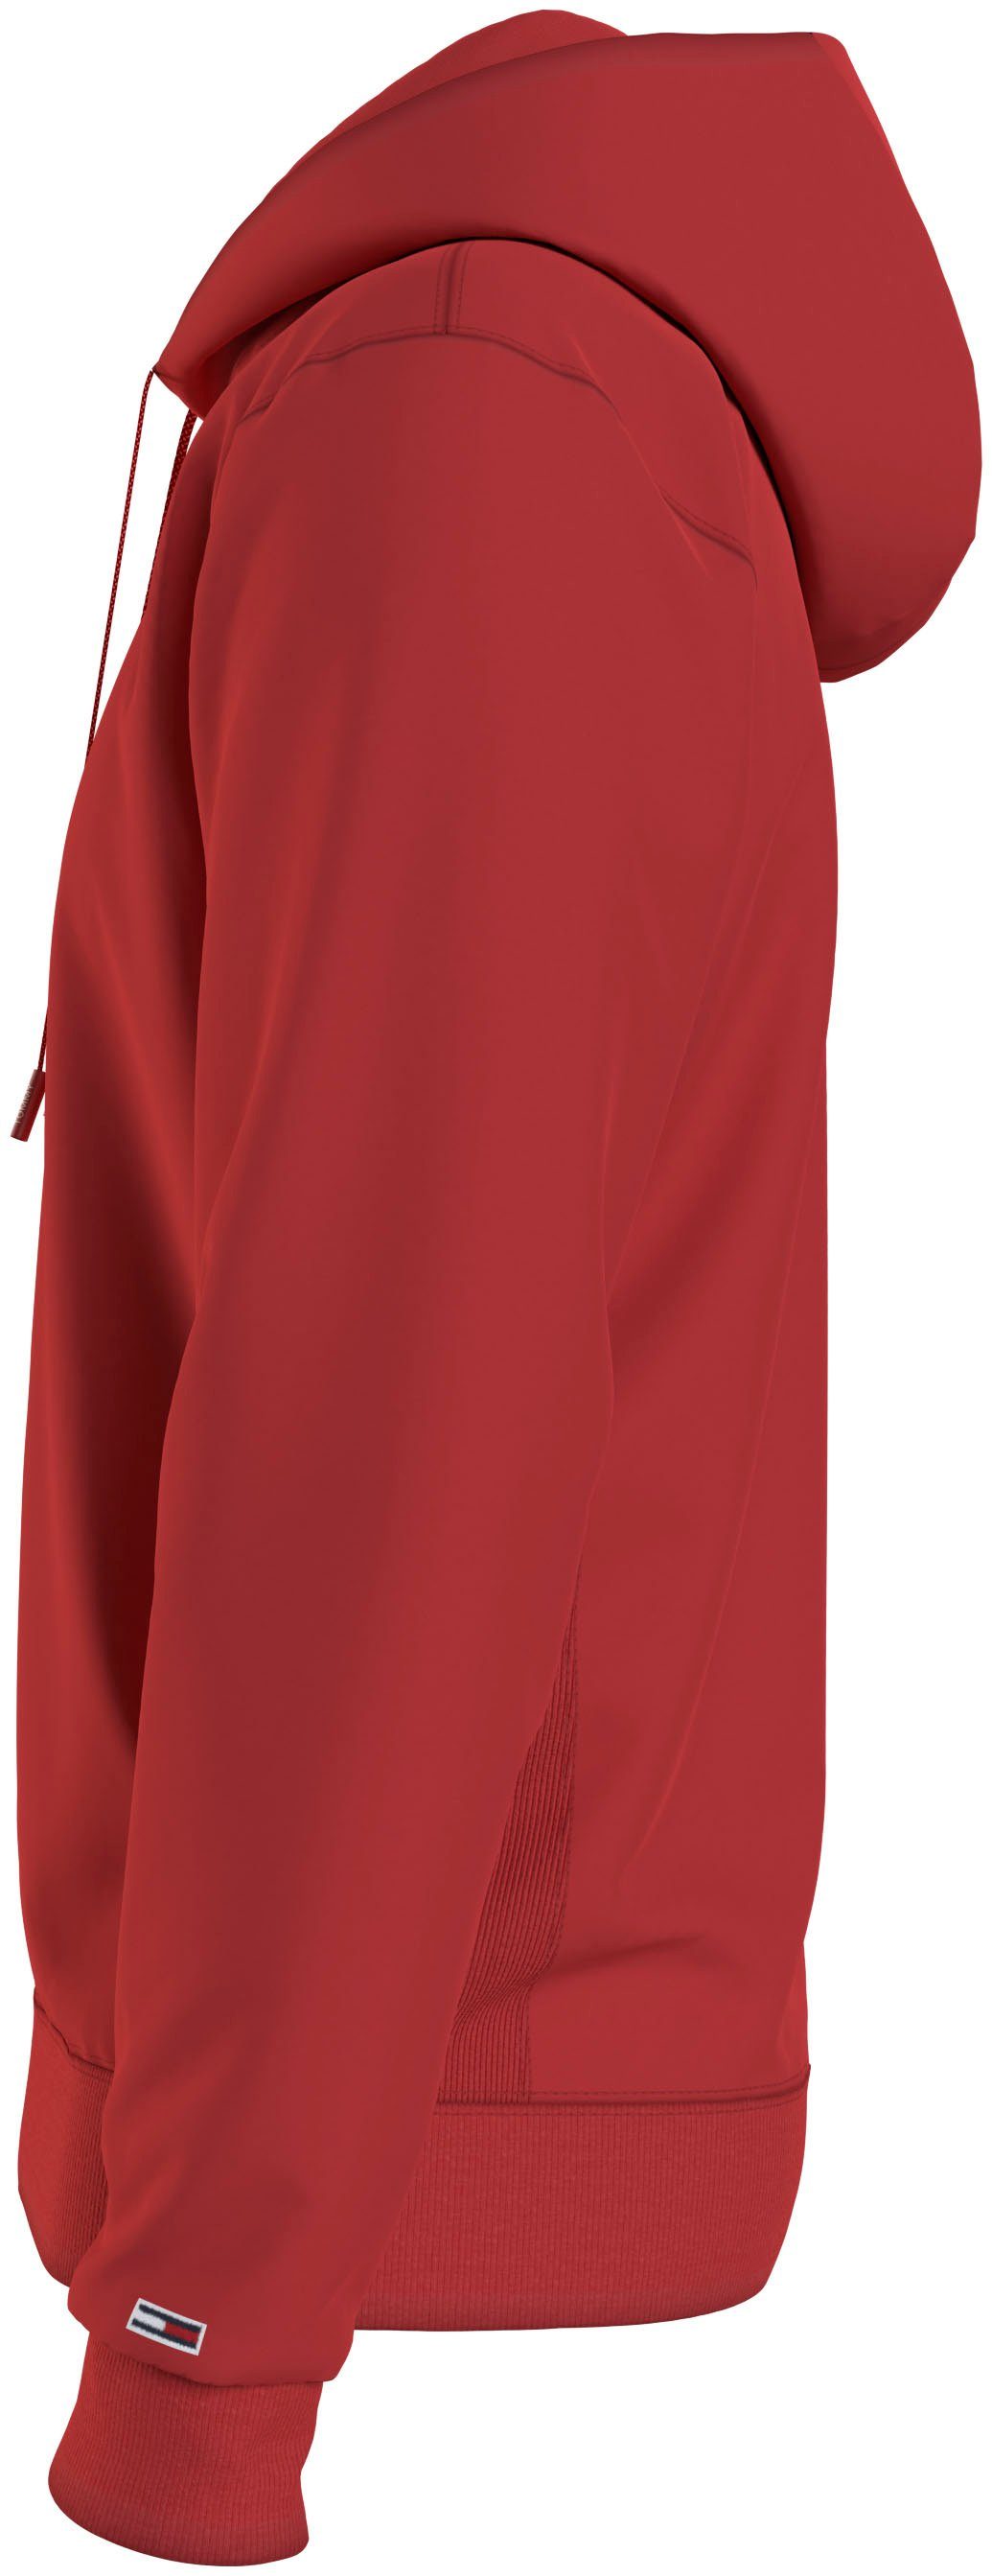 Kapuzensweatshirt Crimson LINEAR LOGO Tommy Deep Jeans HOODIE TJM